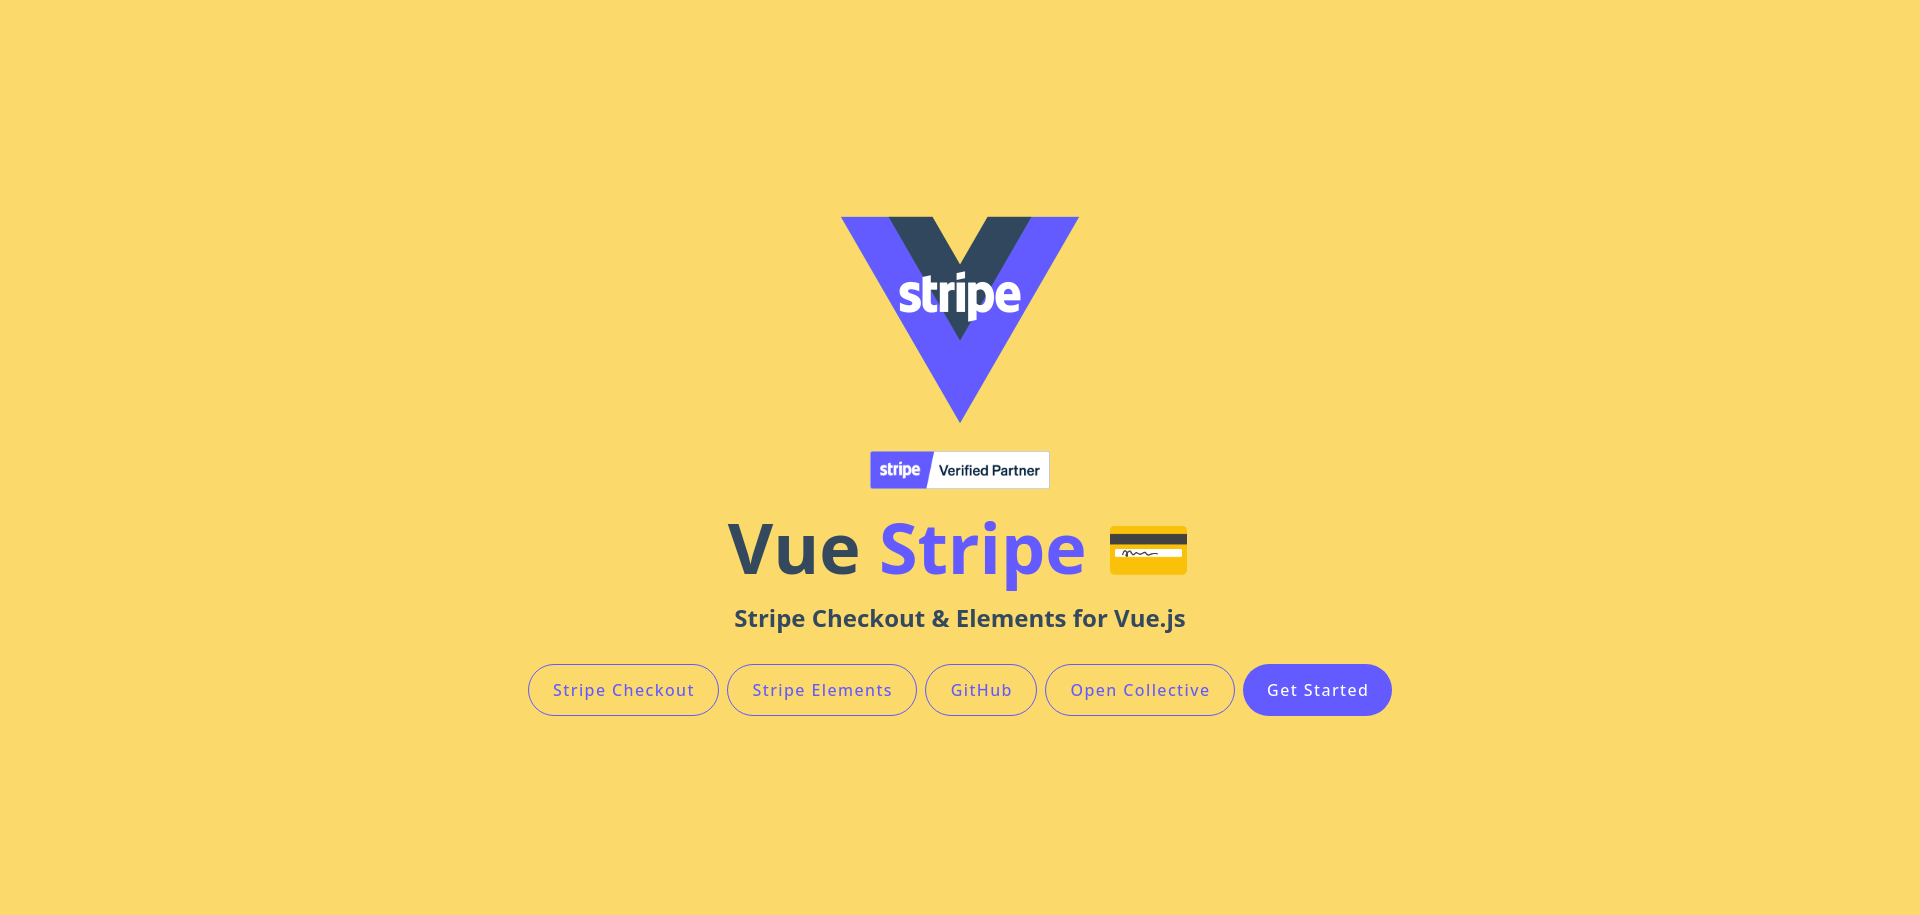 Vue Stripe Home Page